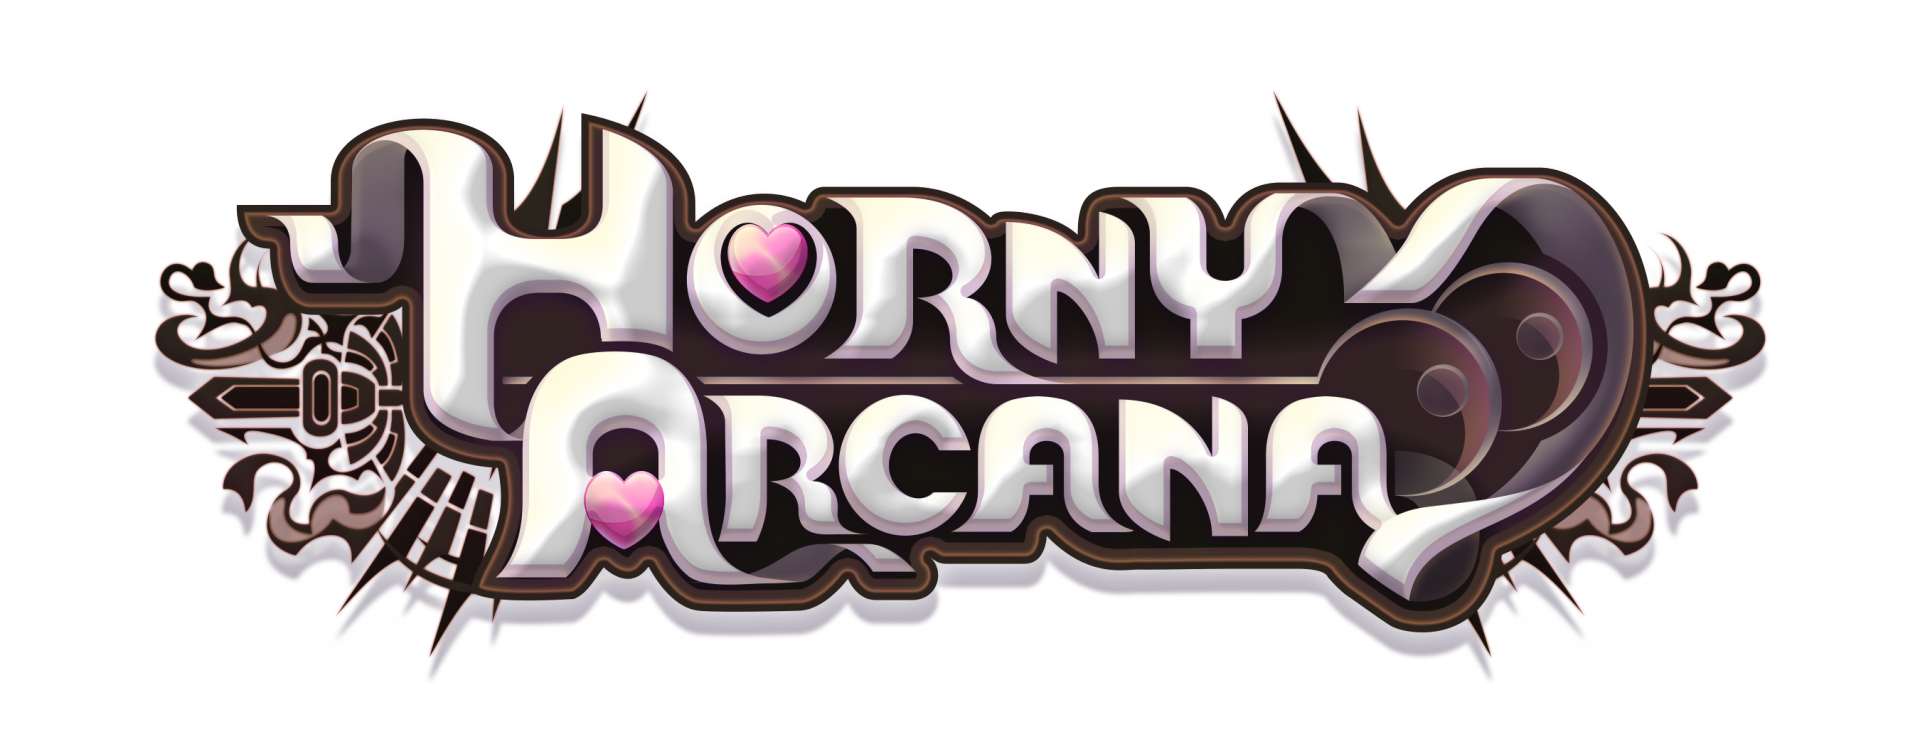 Horny Arcana Deals - wide 7